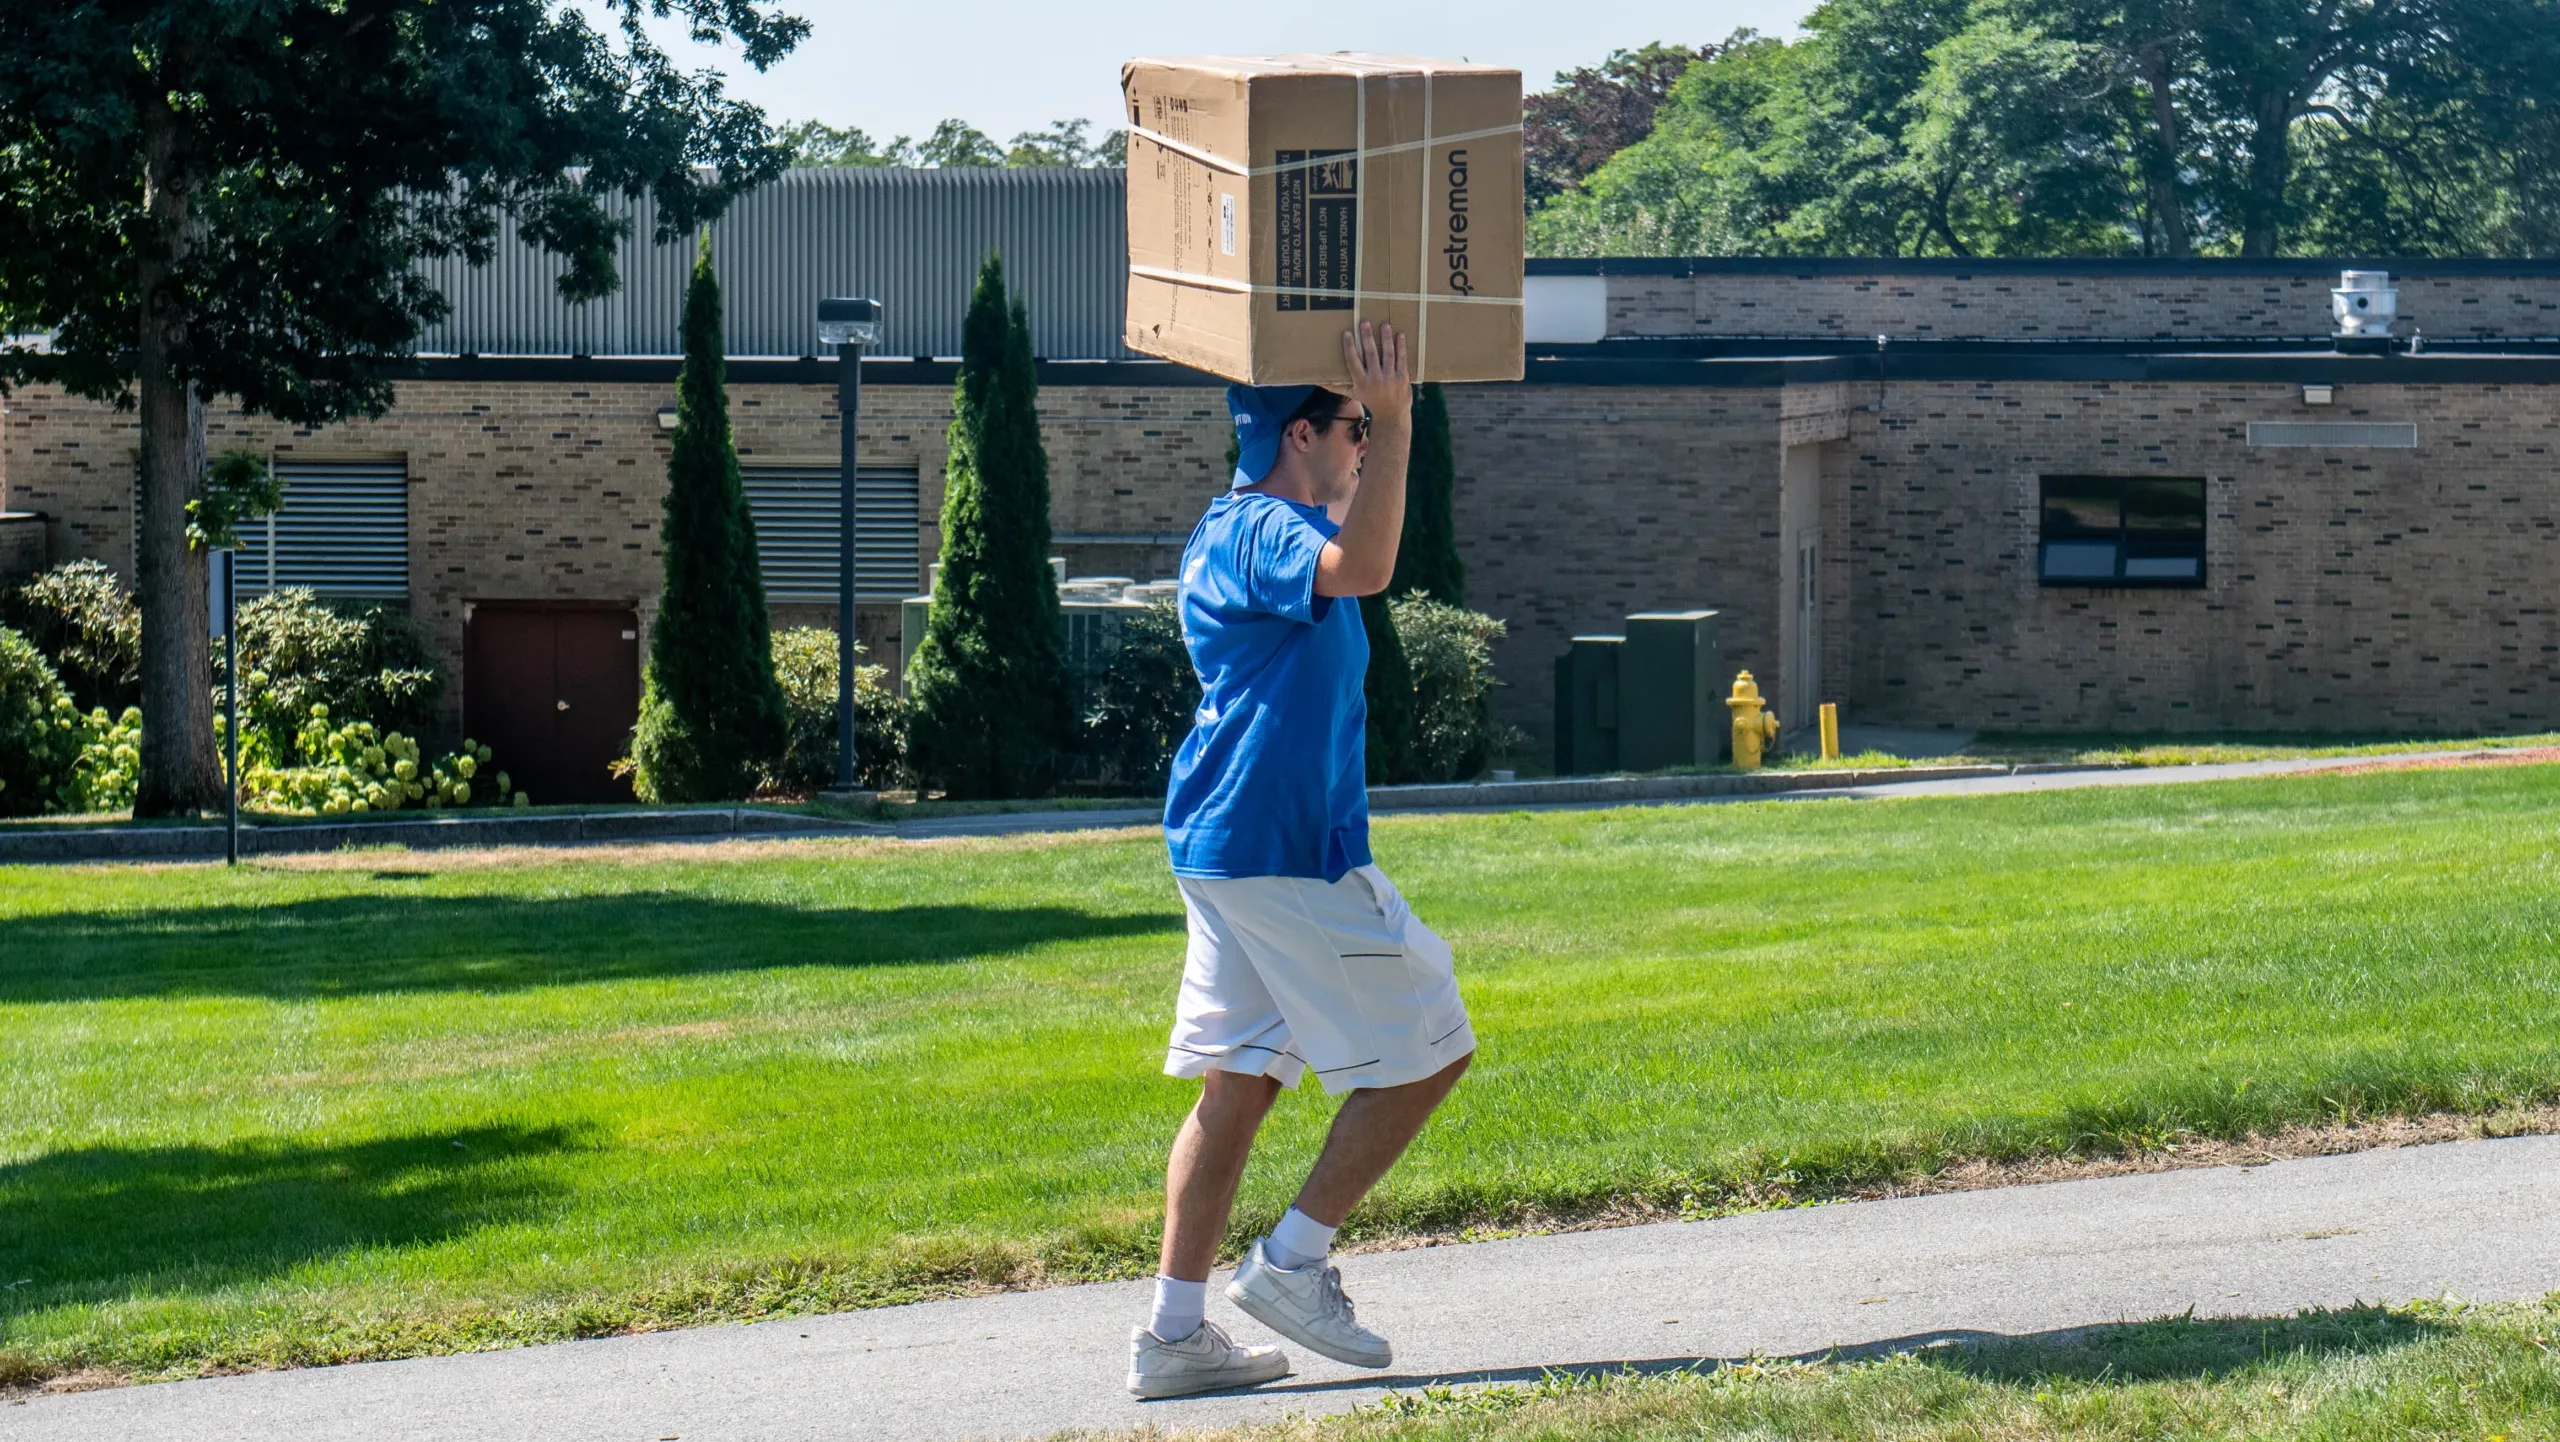 Assumption University student carrying a box into a dorm room